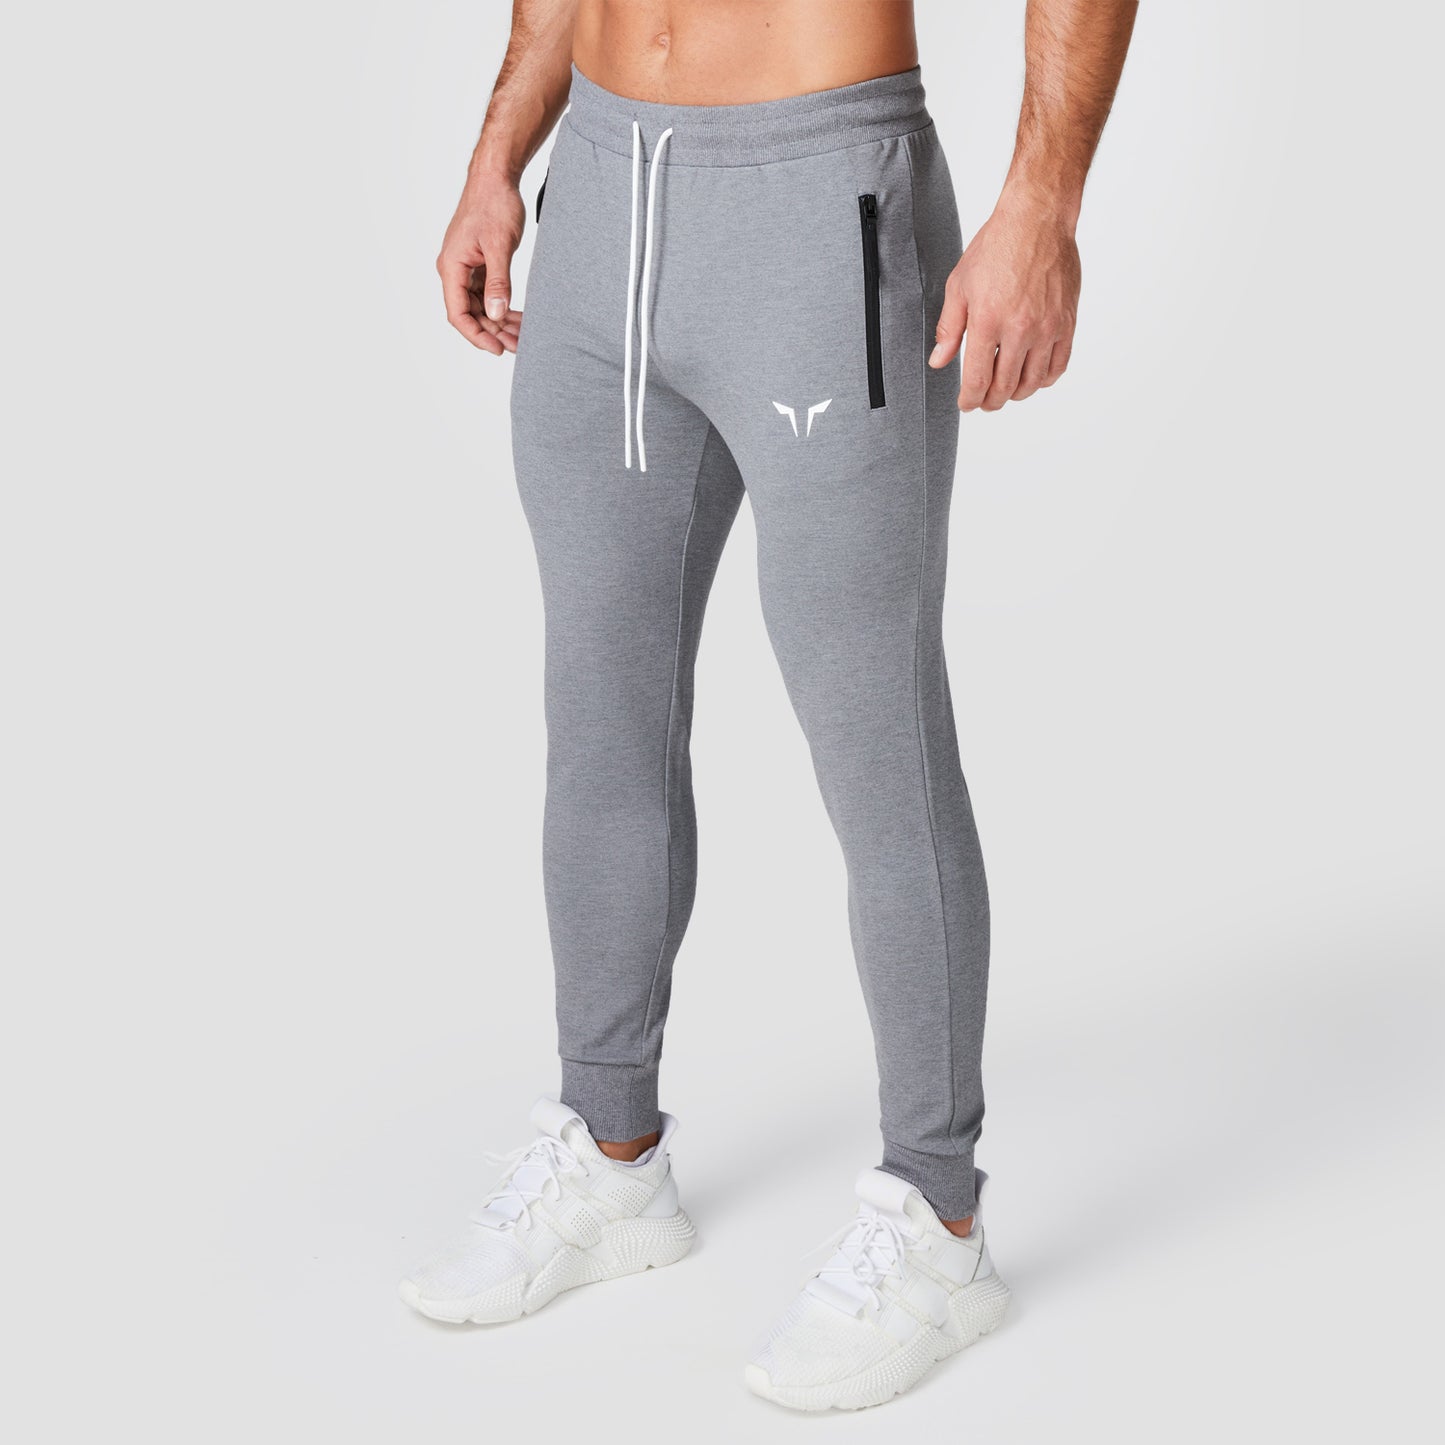 Men's jogger in Classic grey